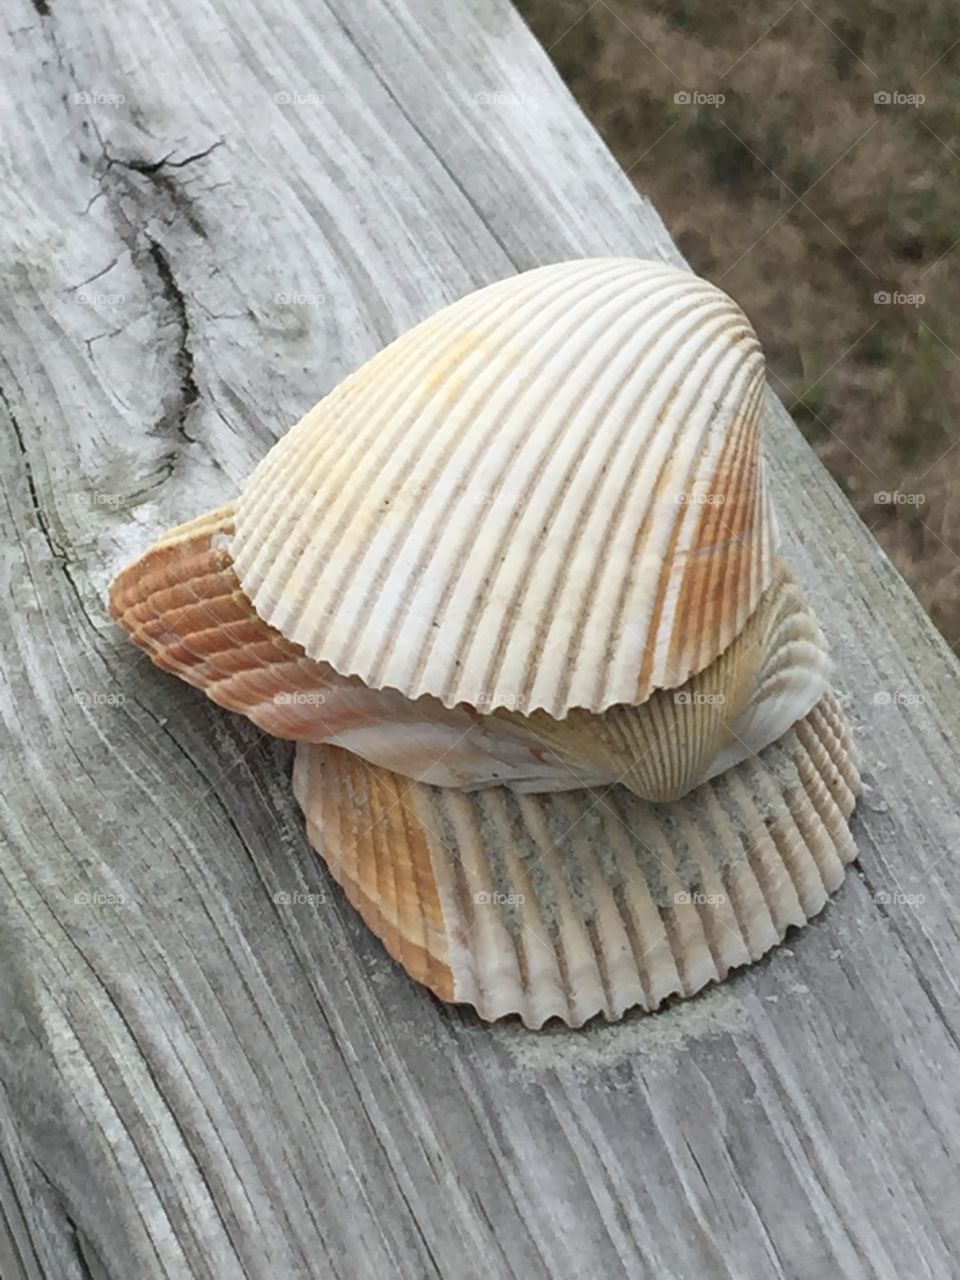 Seashells piled together along the beach.